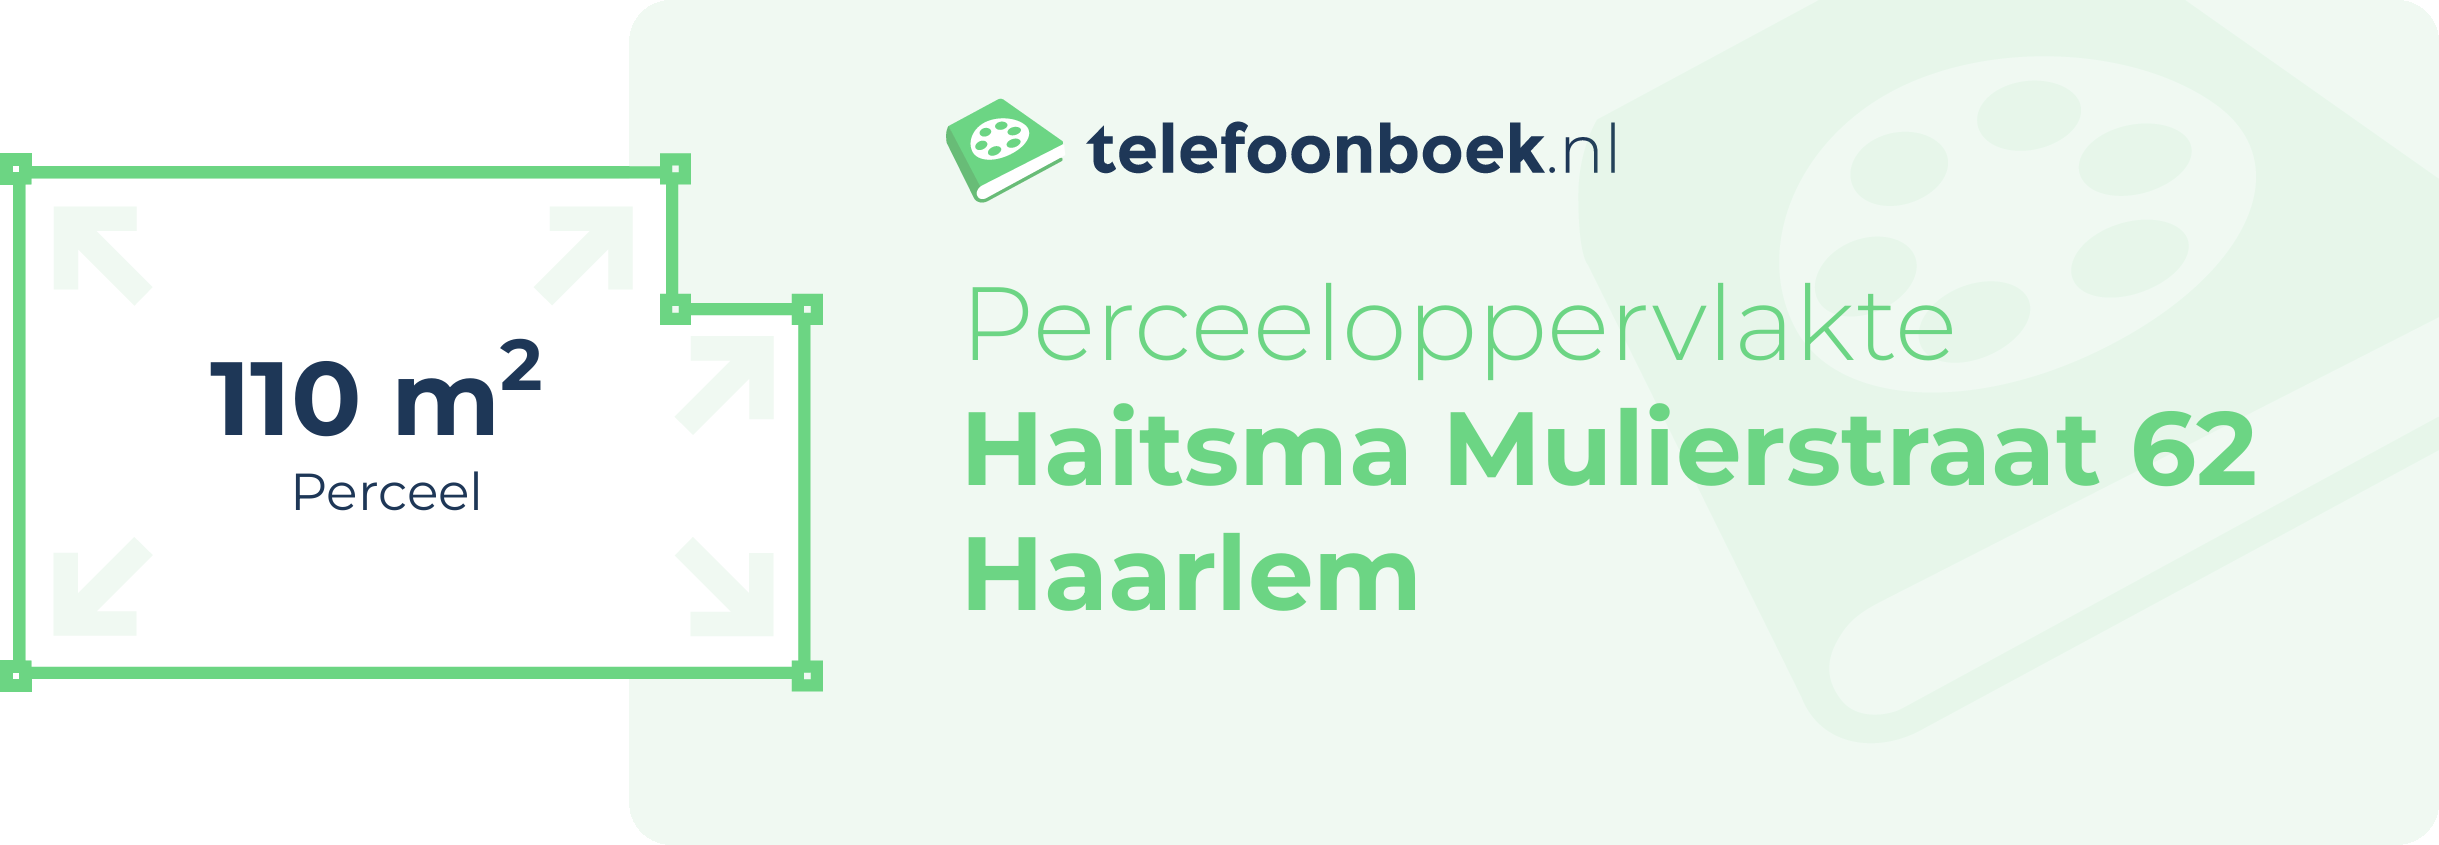 Perceeloppervlakte Haitsma Mulierstraat 62 Haarlem